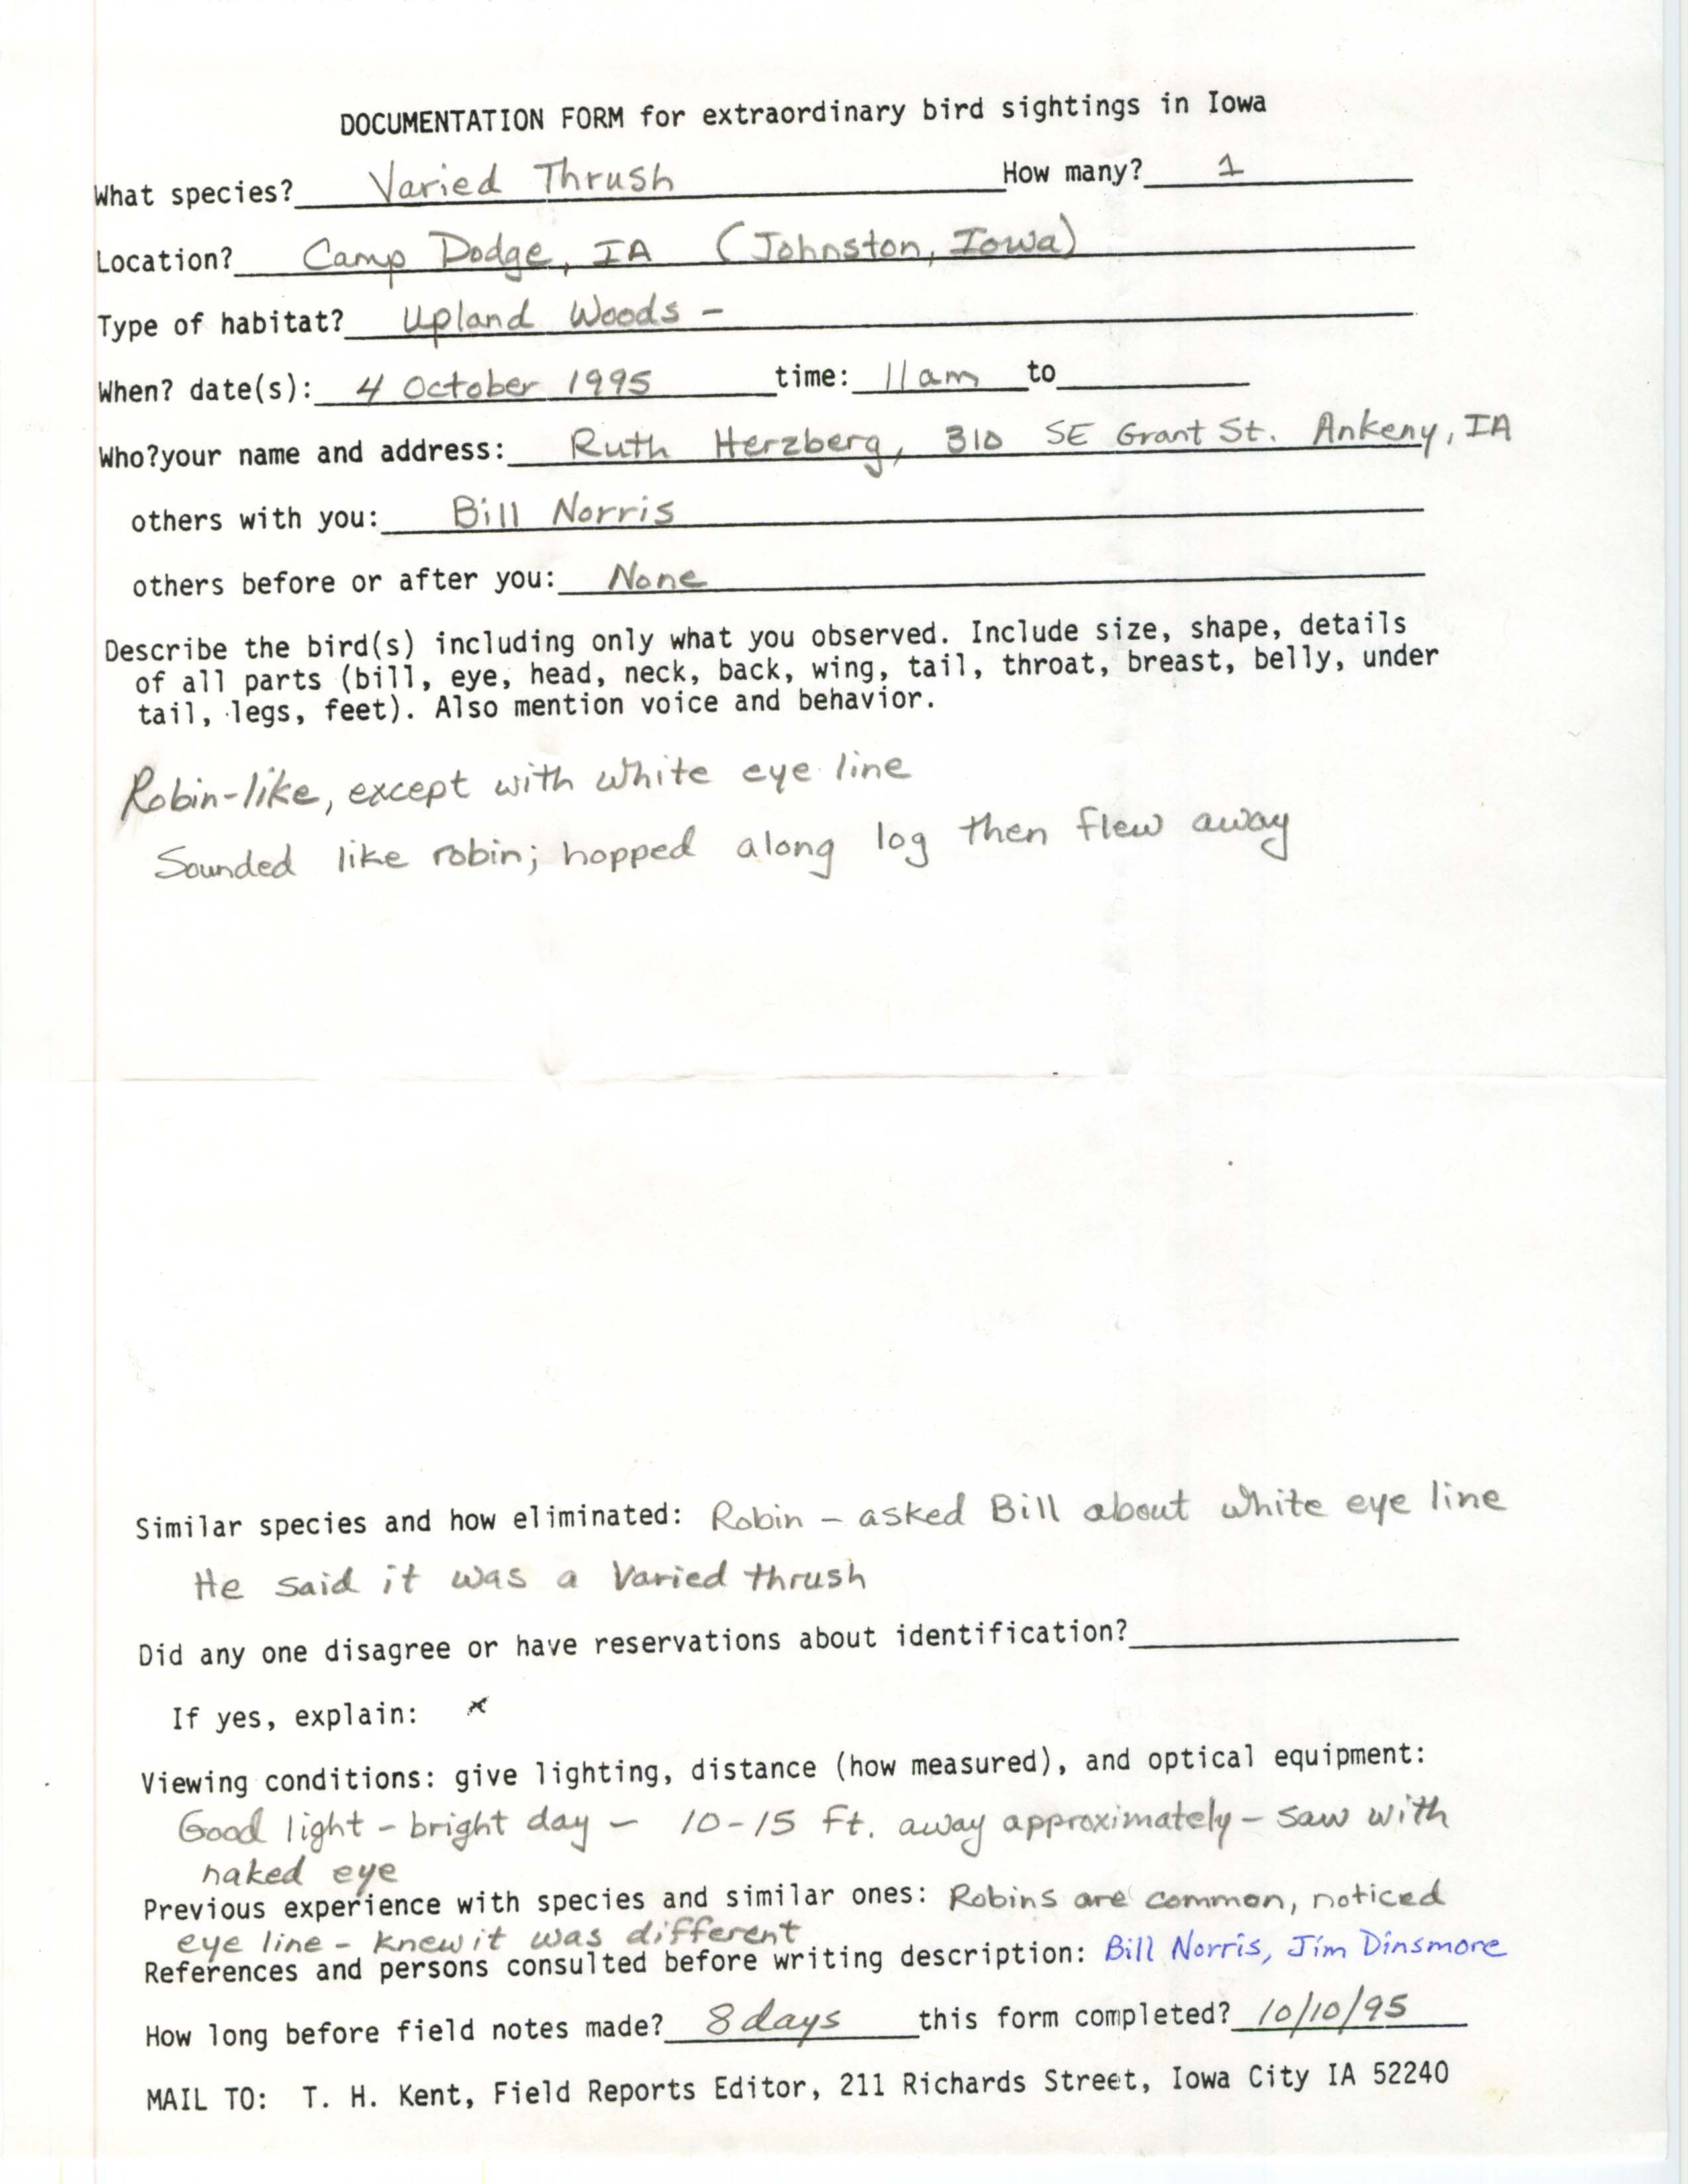 Rare bird documentation form for Varied Thrush at Camp Dodge, 1995